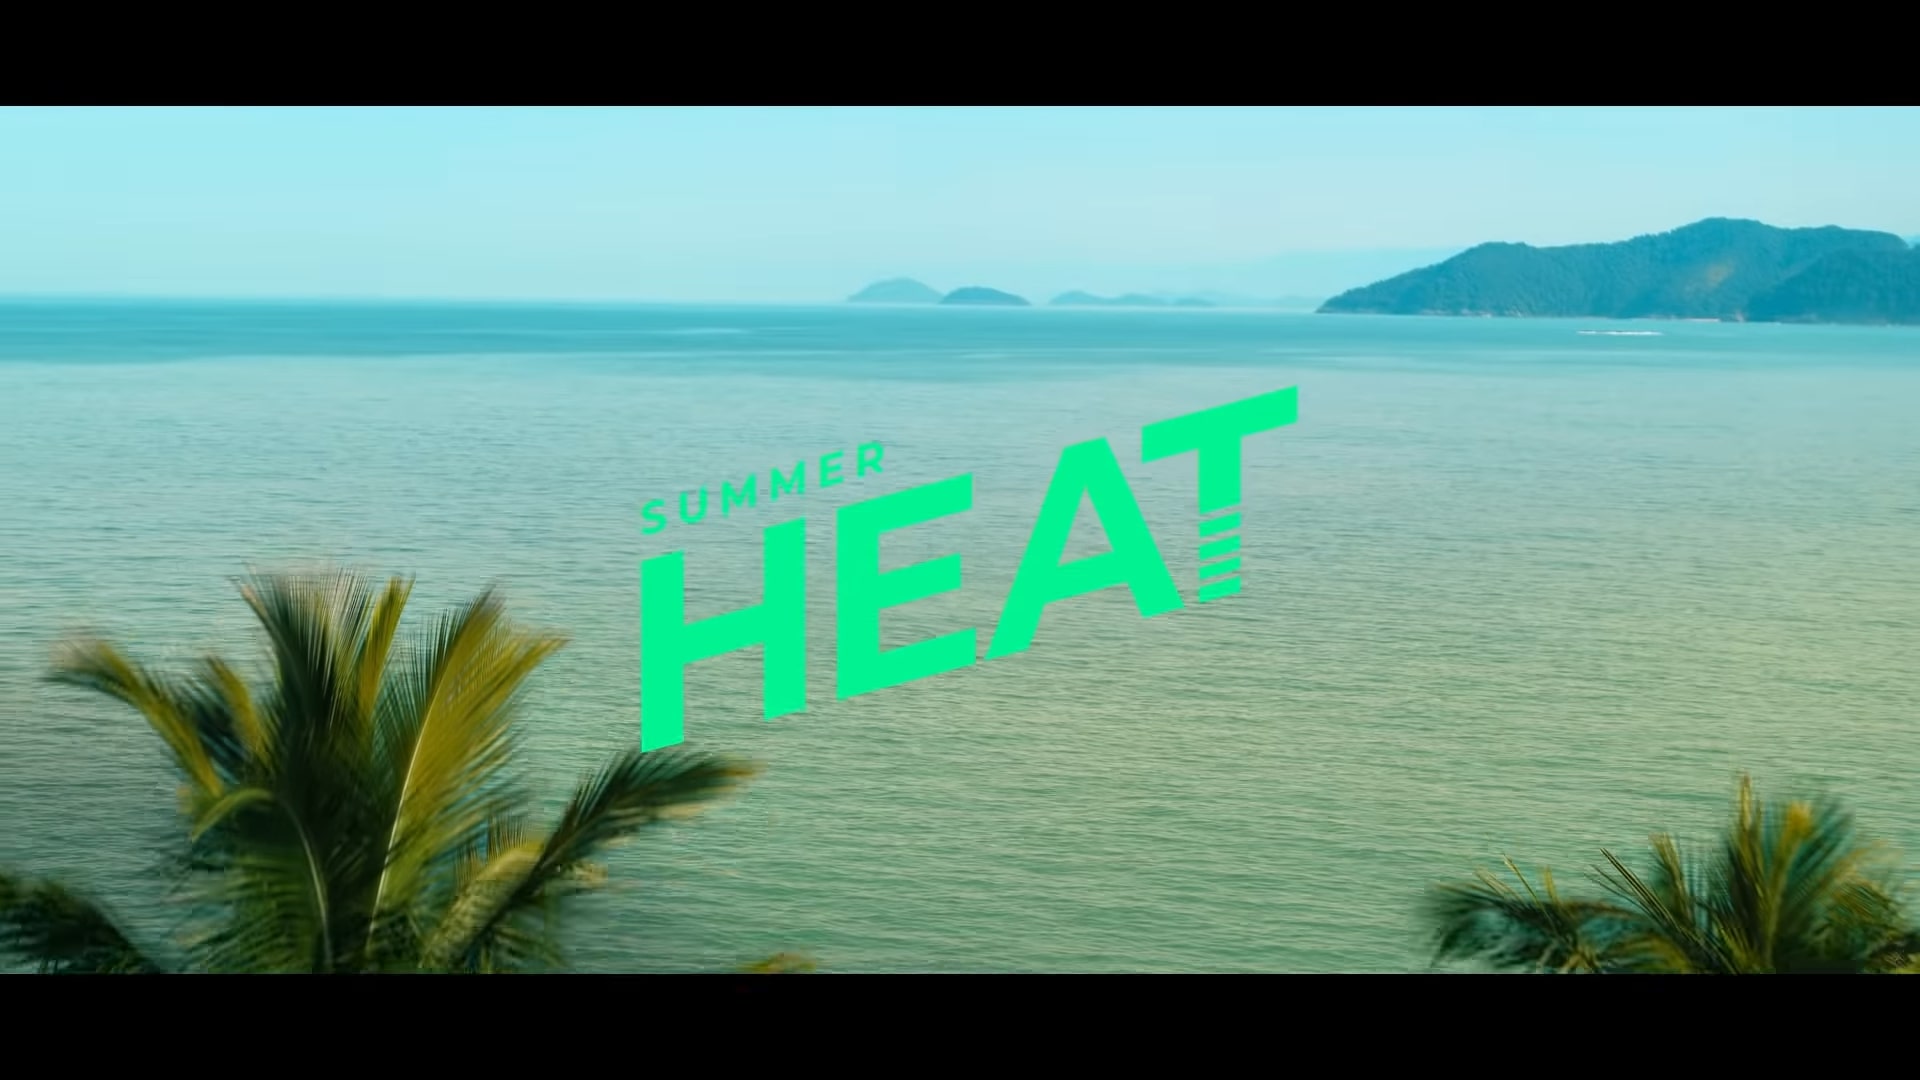 Netflix Summer Heat Trailer, Coming to Netflix in January 2022